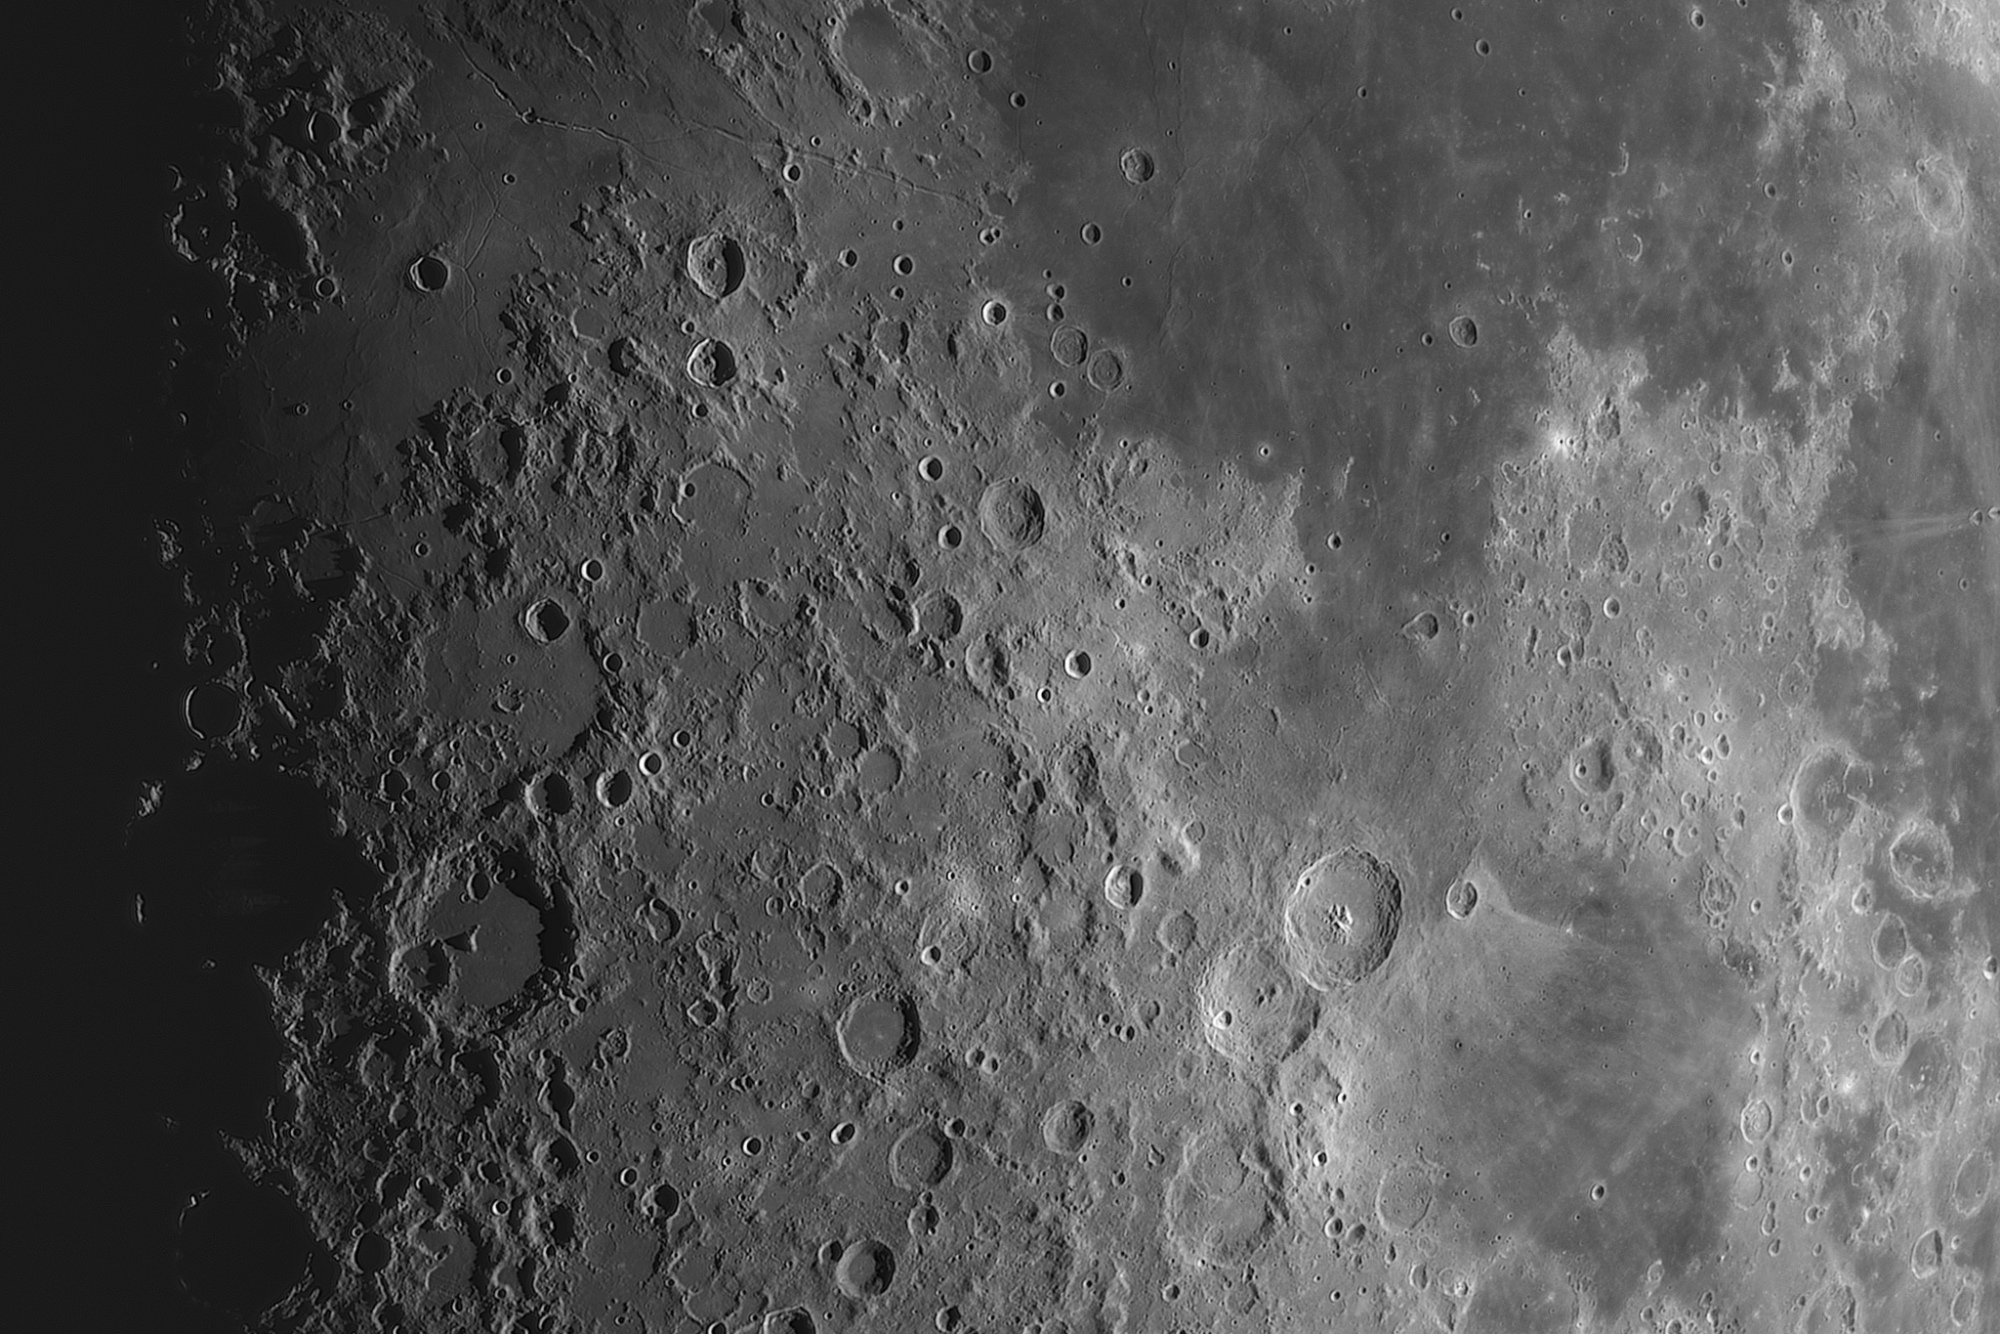 Moon 19 04 21-crop2.jpg